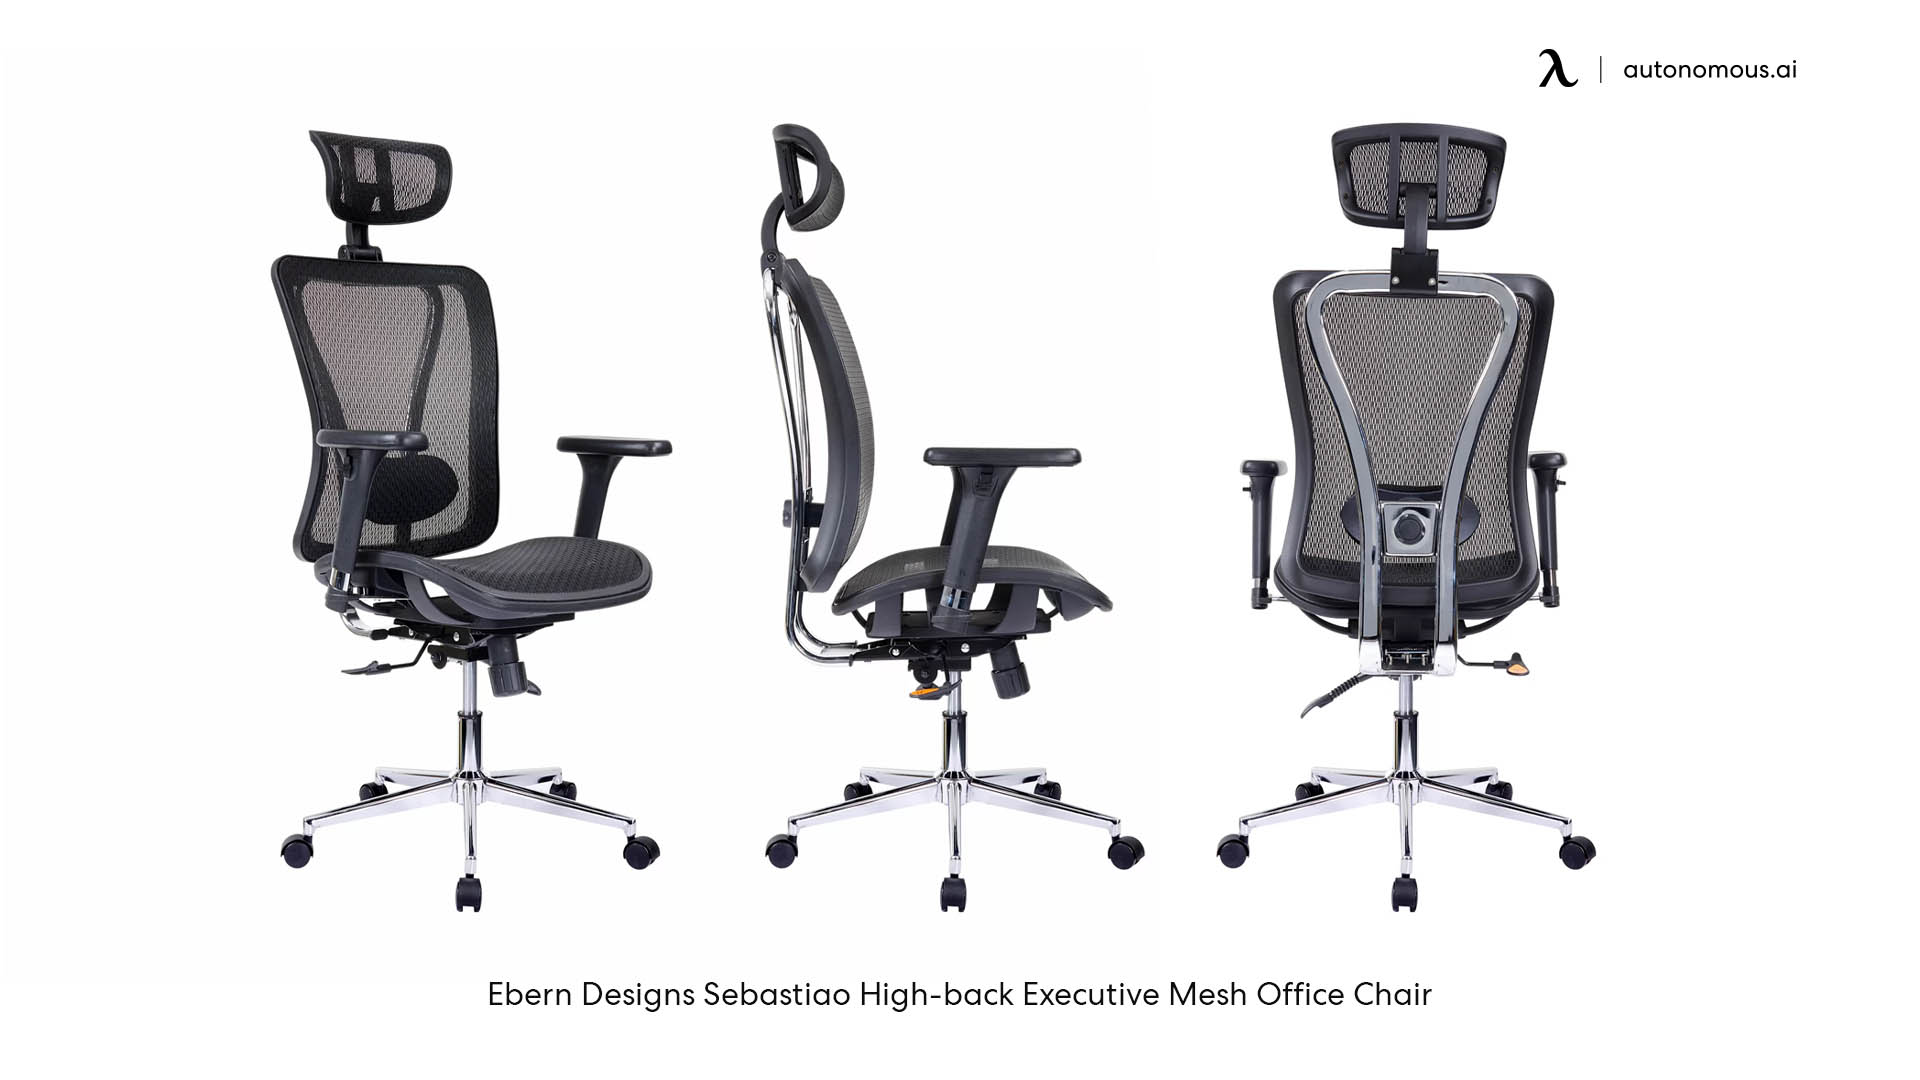 Ebern Designs Sebastiao headrest for office chair